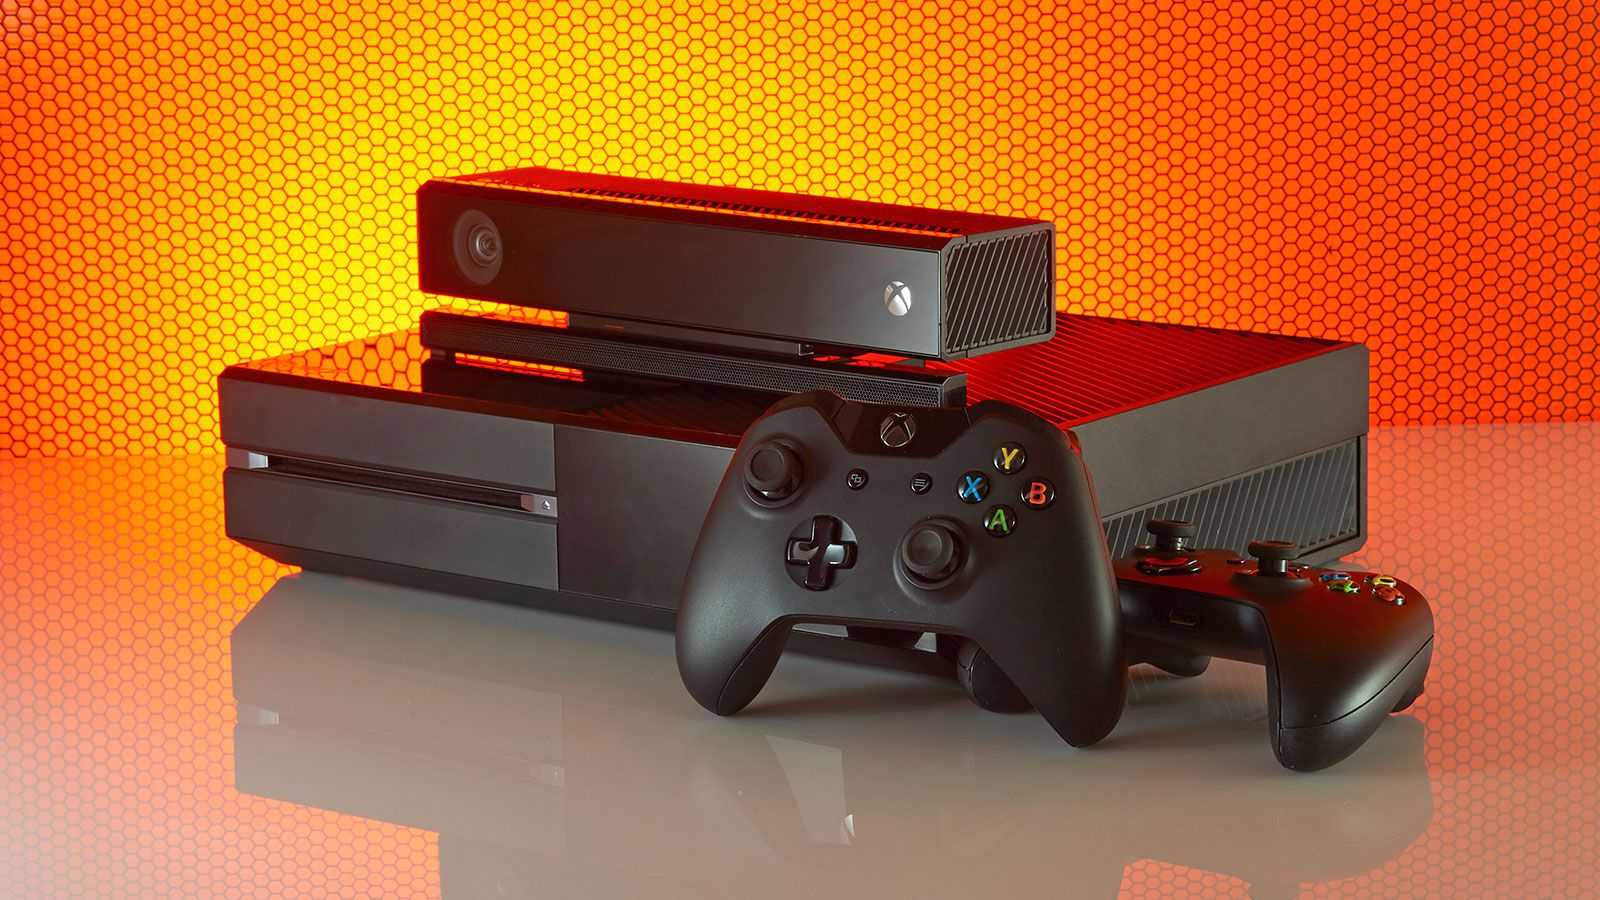 Microsoft vai fabricar console Xbox 360 no Brasil